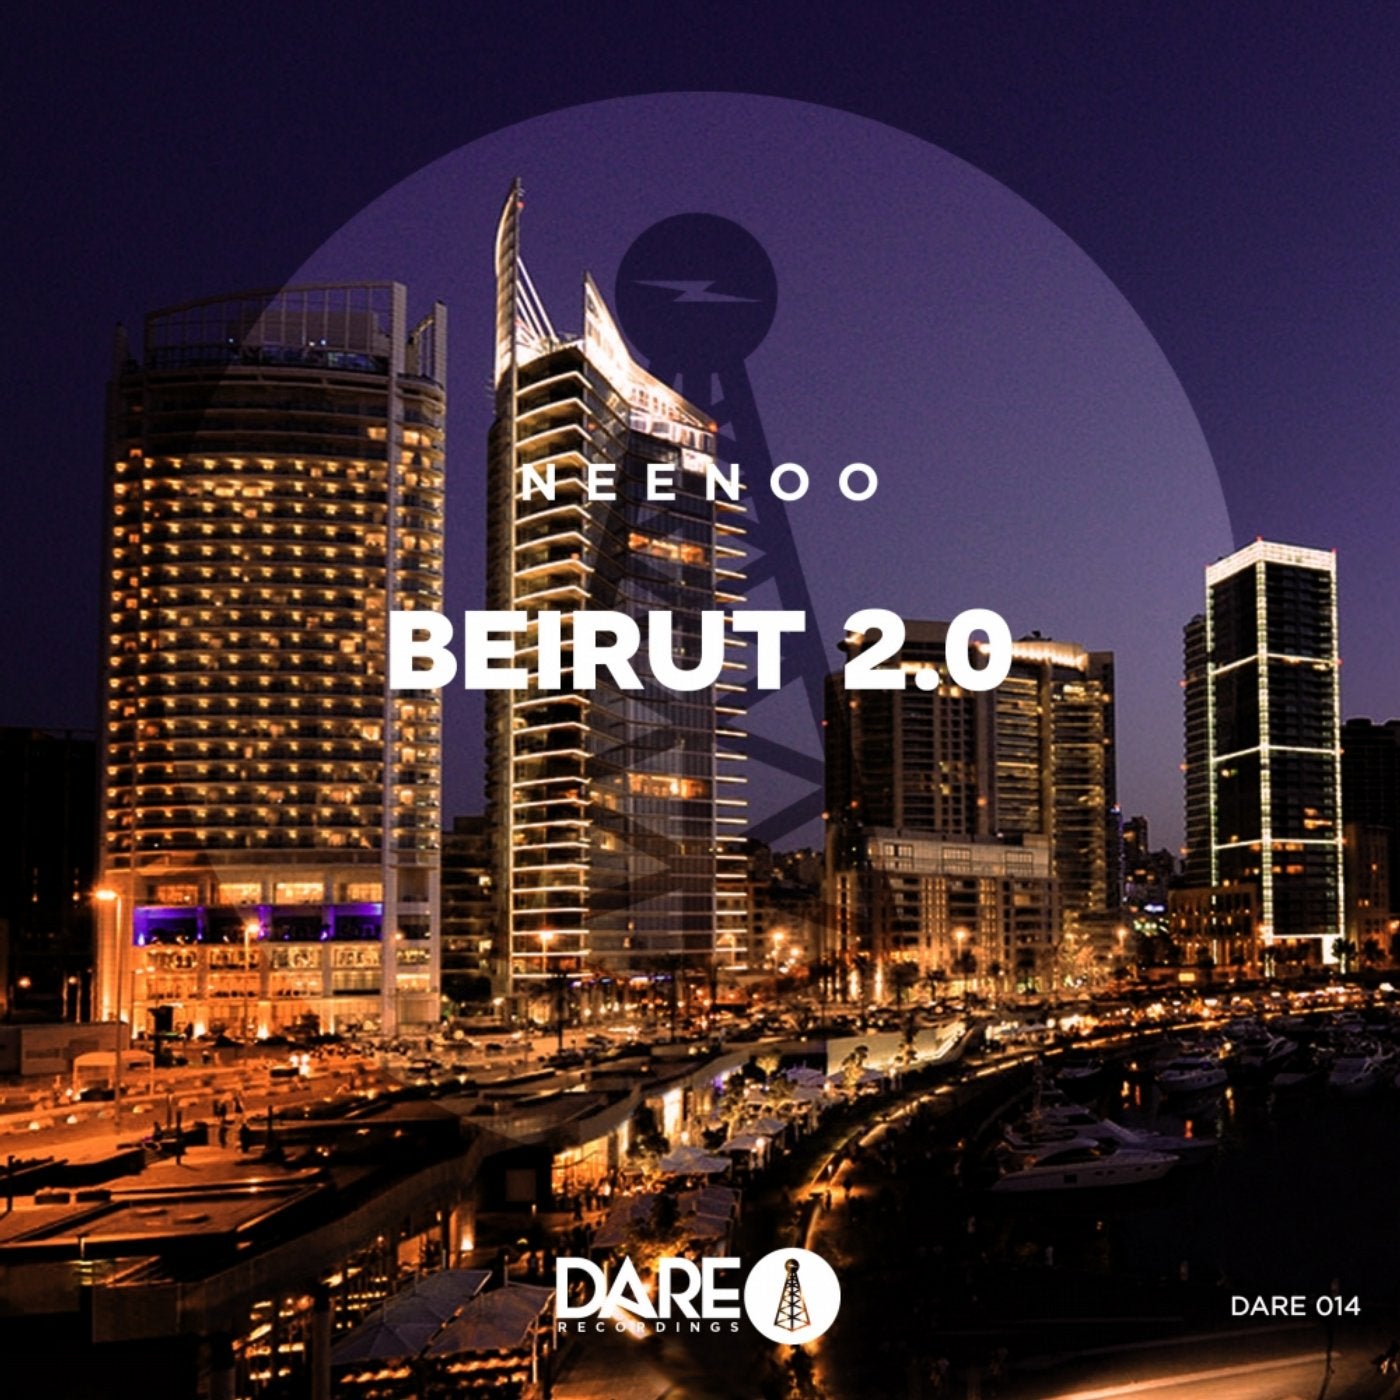 Beirut 2.0